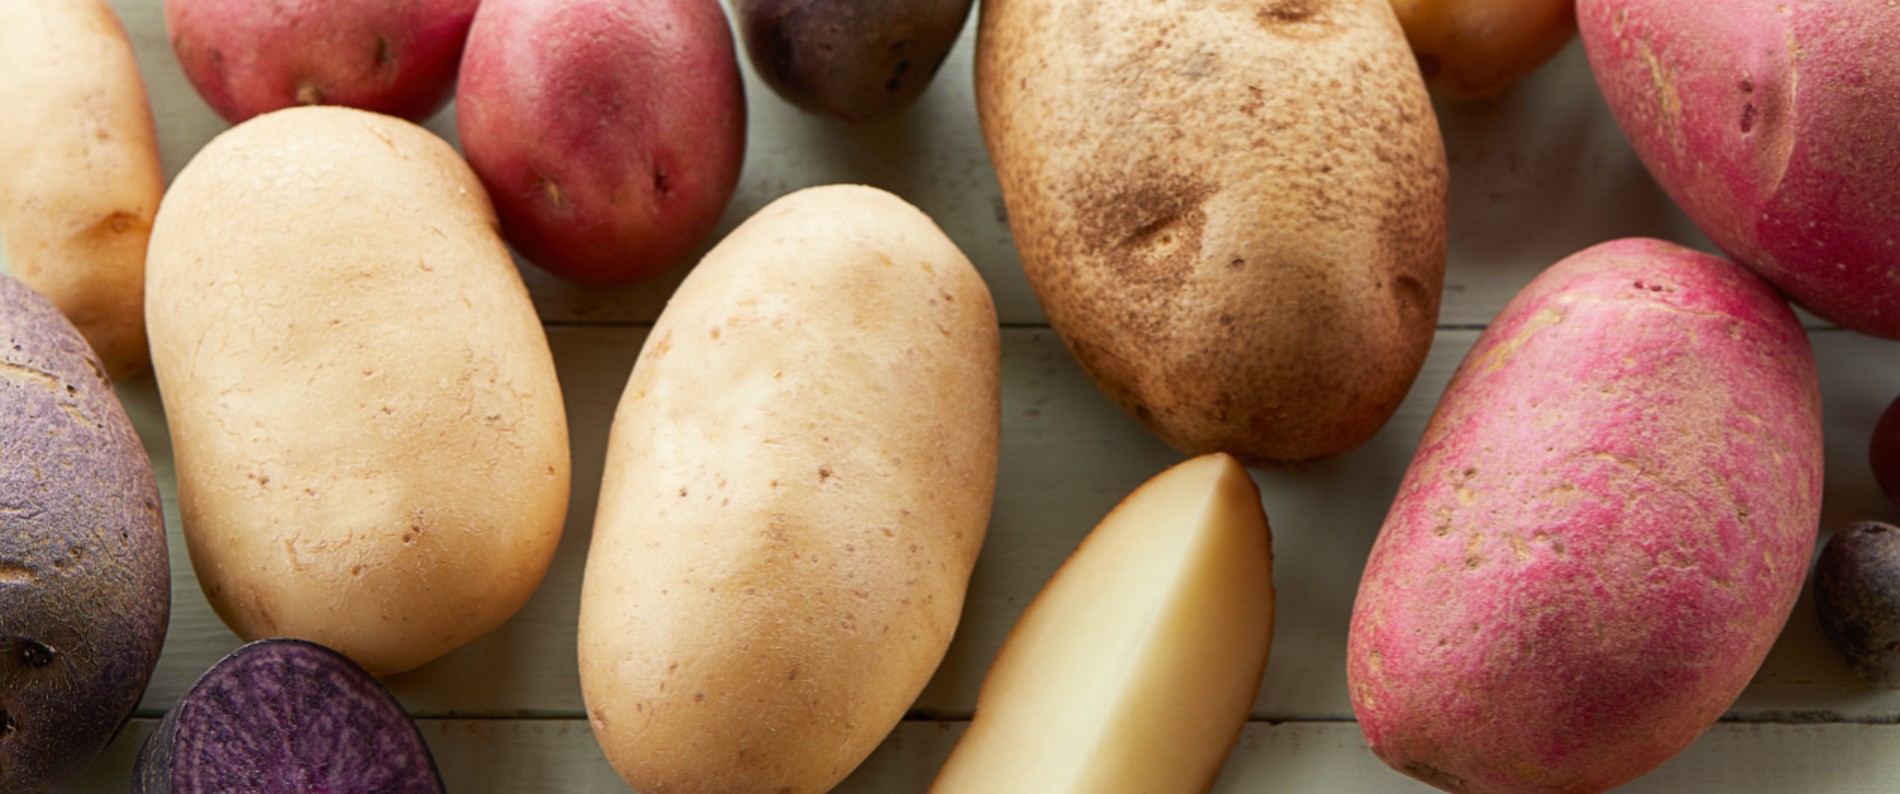 U.S. Potato Farmers Share the Best Way to Store Potatoes